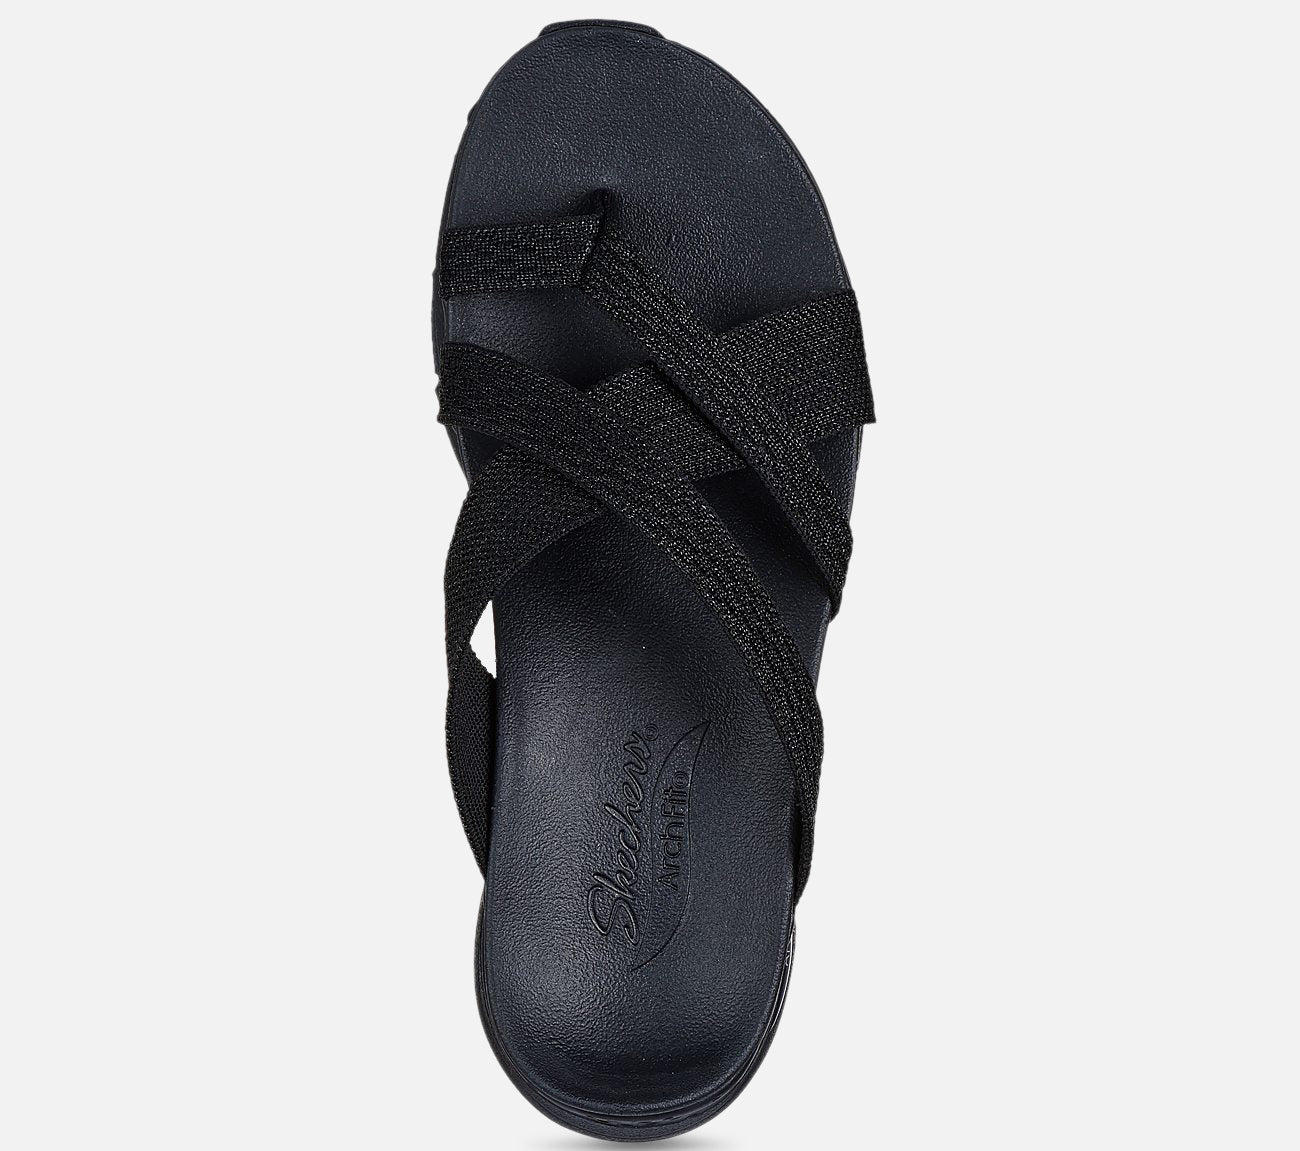 Arch Fit sandal - New Beginning Sandal Skechers